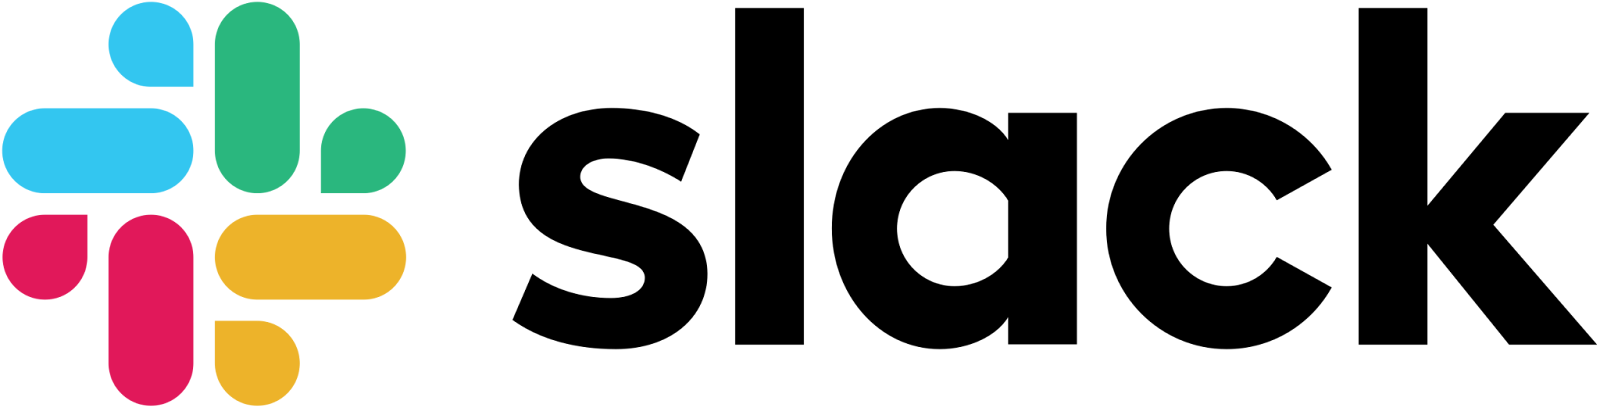 slack's logo